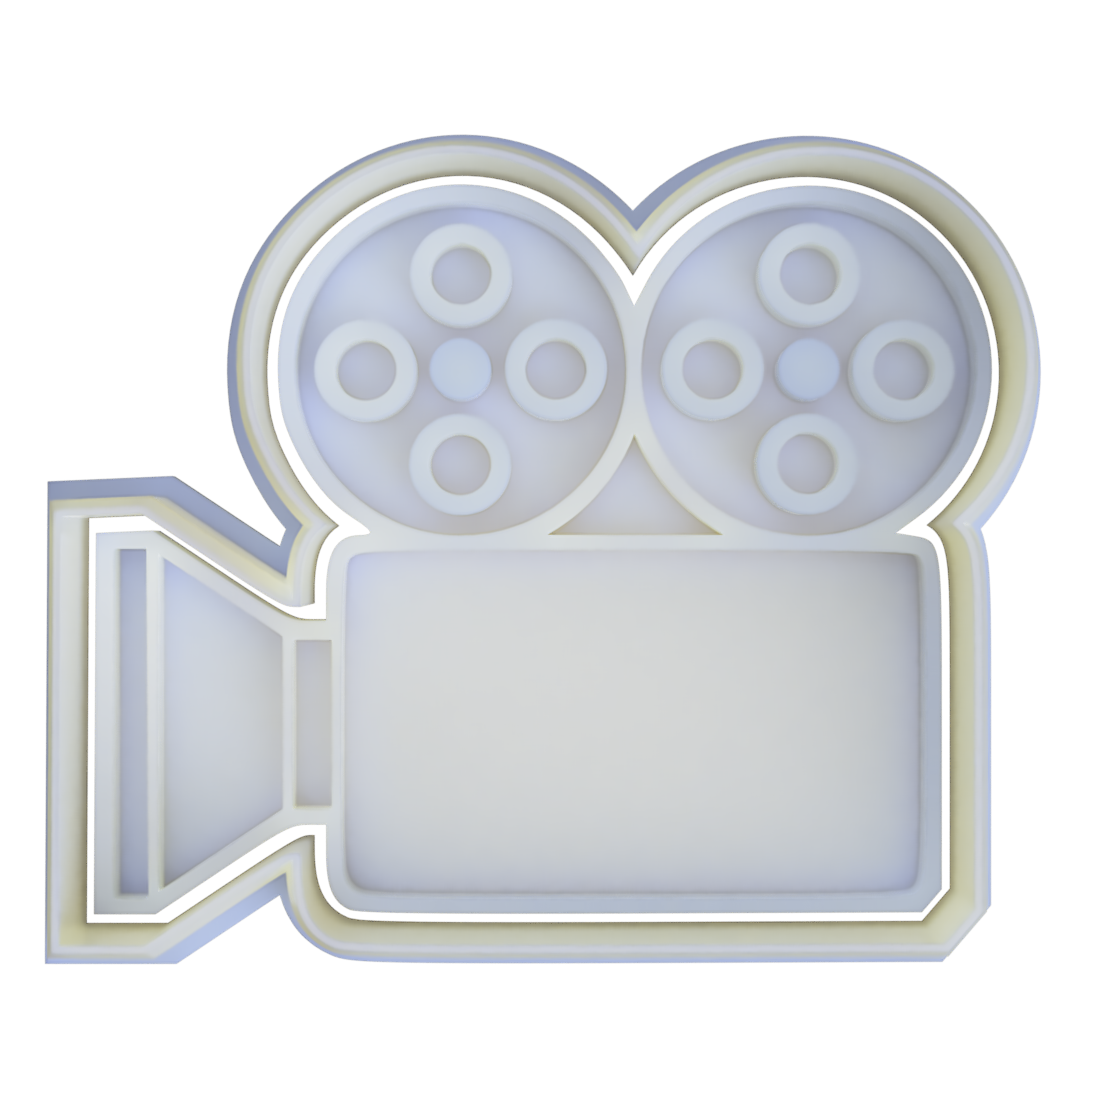 Movie Camera Cookie cutter. – Just Little Luxuries